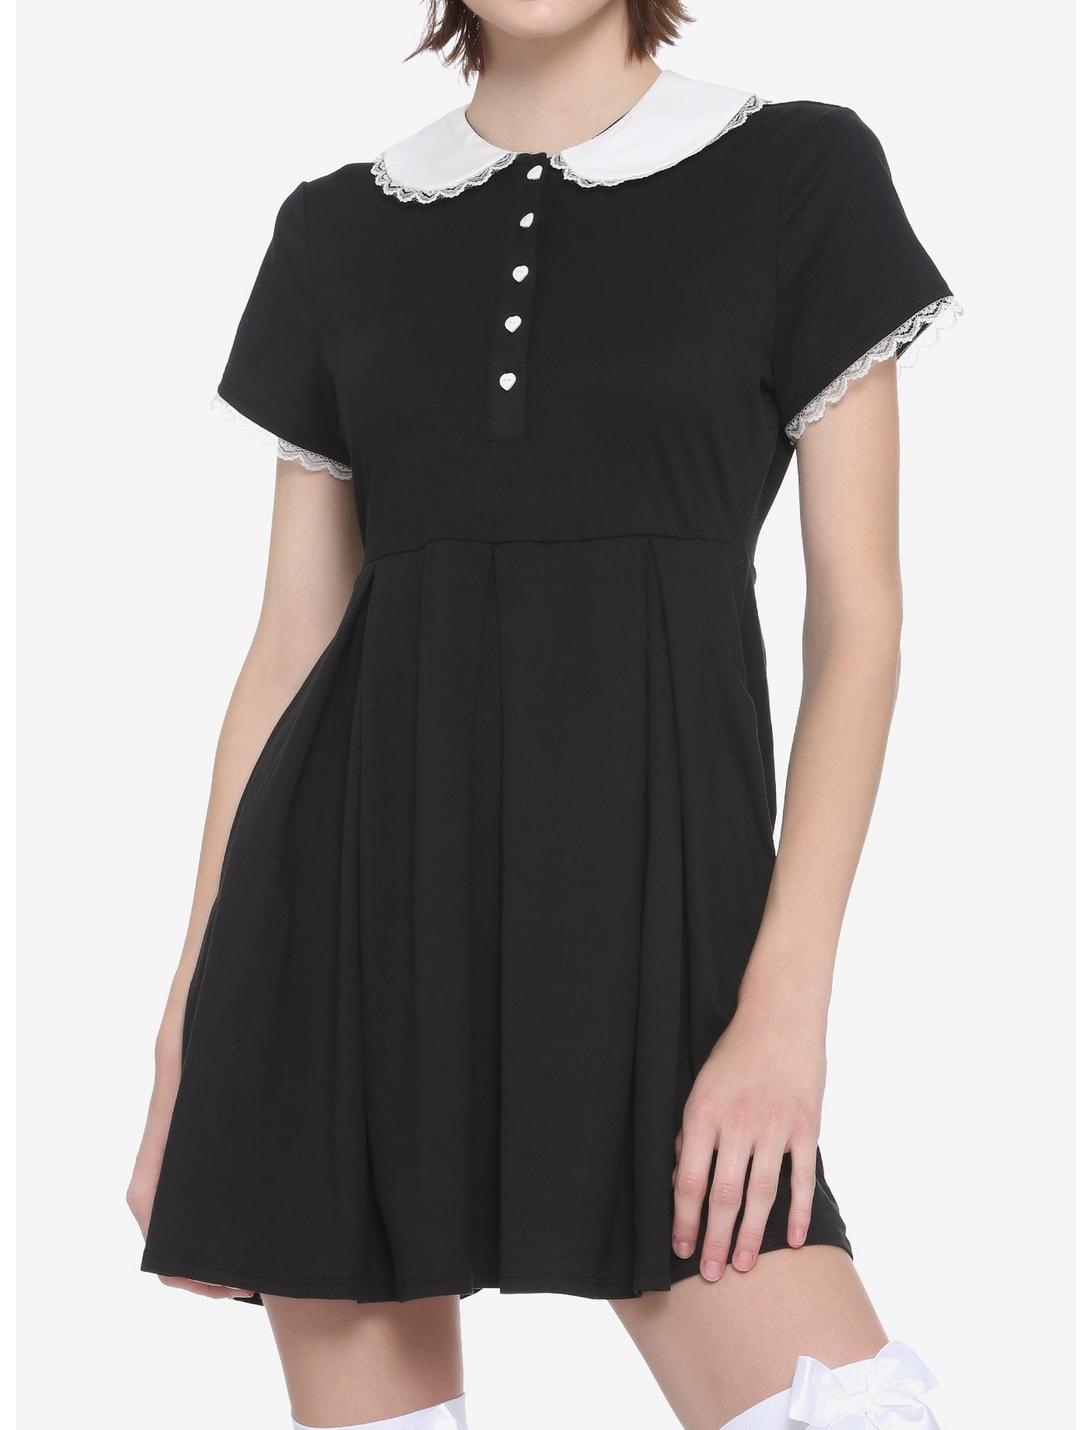 Lace Collar Black Dress, BLACK, hi-res